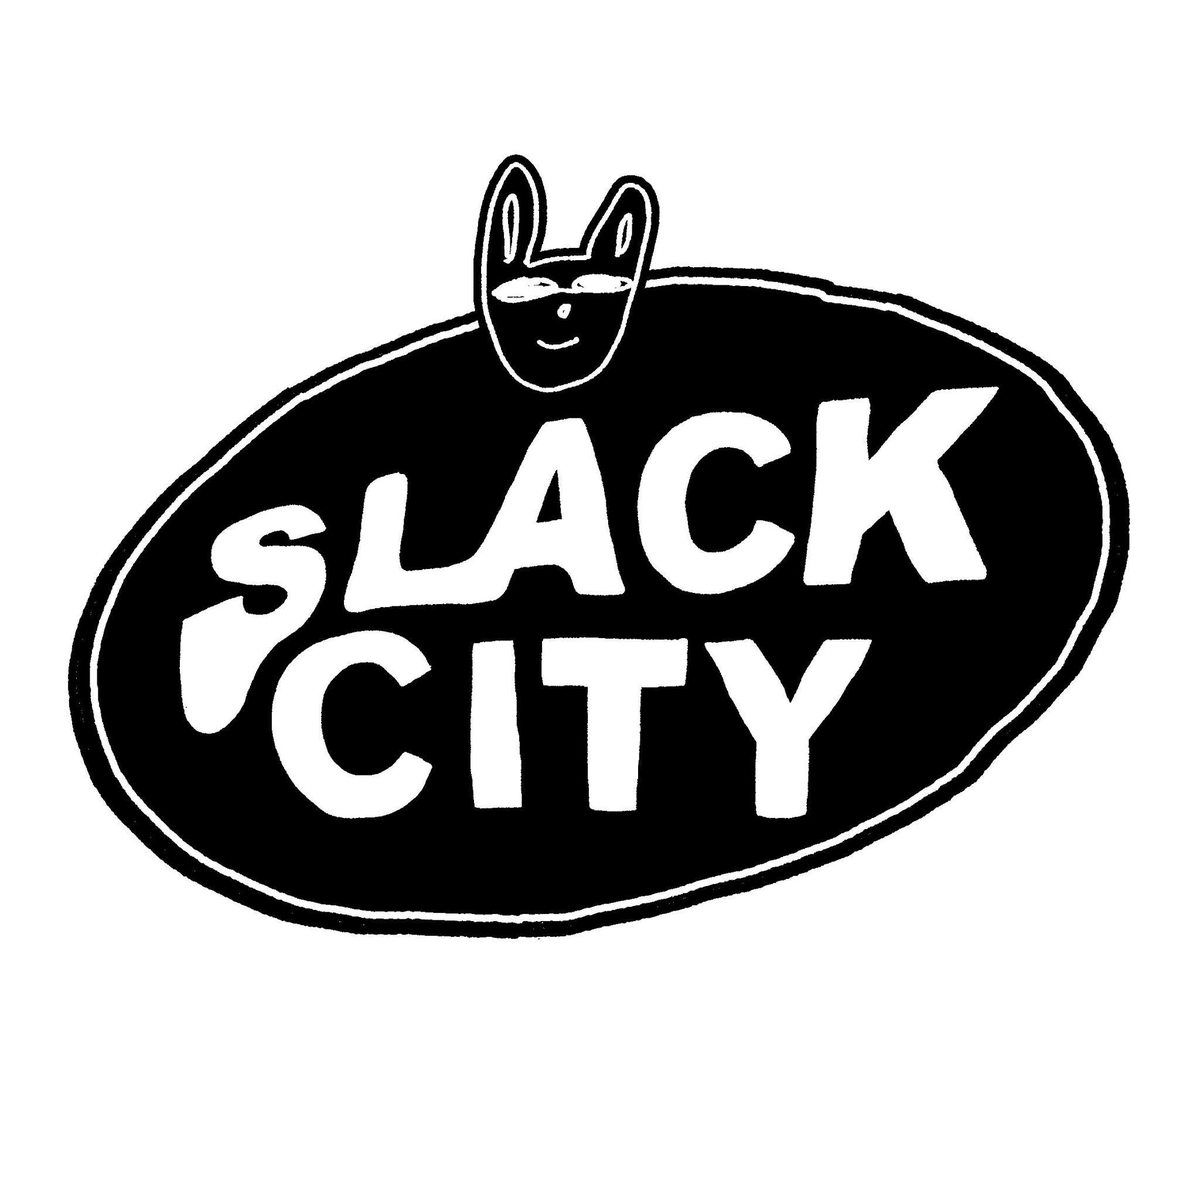 Ep.3 of #HackCity TONIGHT 7-8PM live @slackcityradio! @jegardUK & @rosiejamesie welcome the v funny @JDanielewski84 & @elainefellows_ to @theactorsbrighton studio to chat about their @Brightonfringe shows & all things #StandUpComedy in #Brighton & beyond. slackcity.org.uk